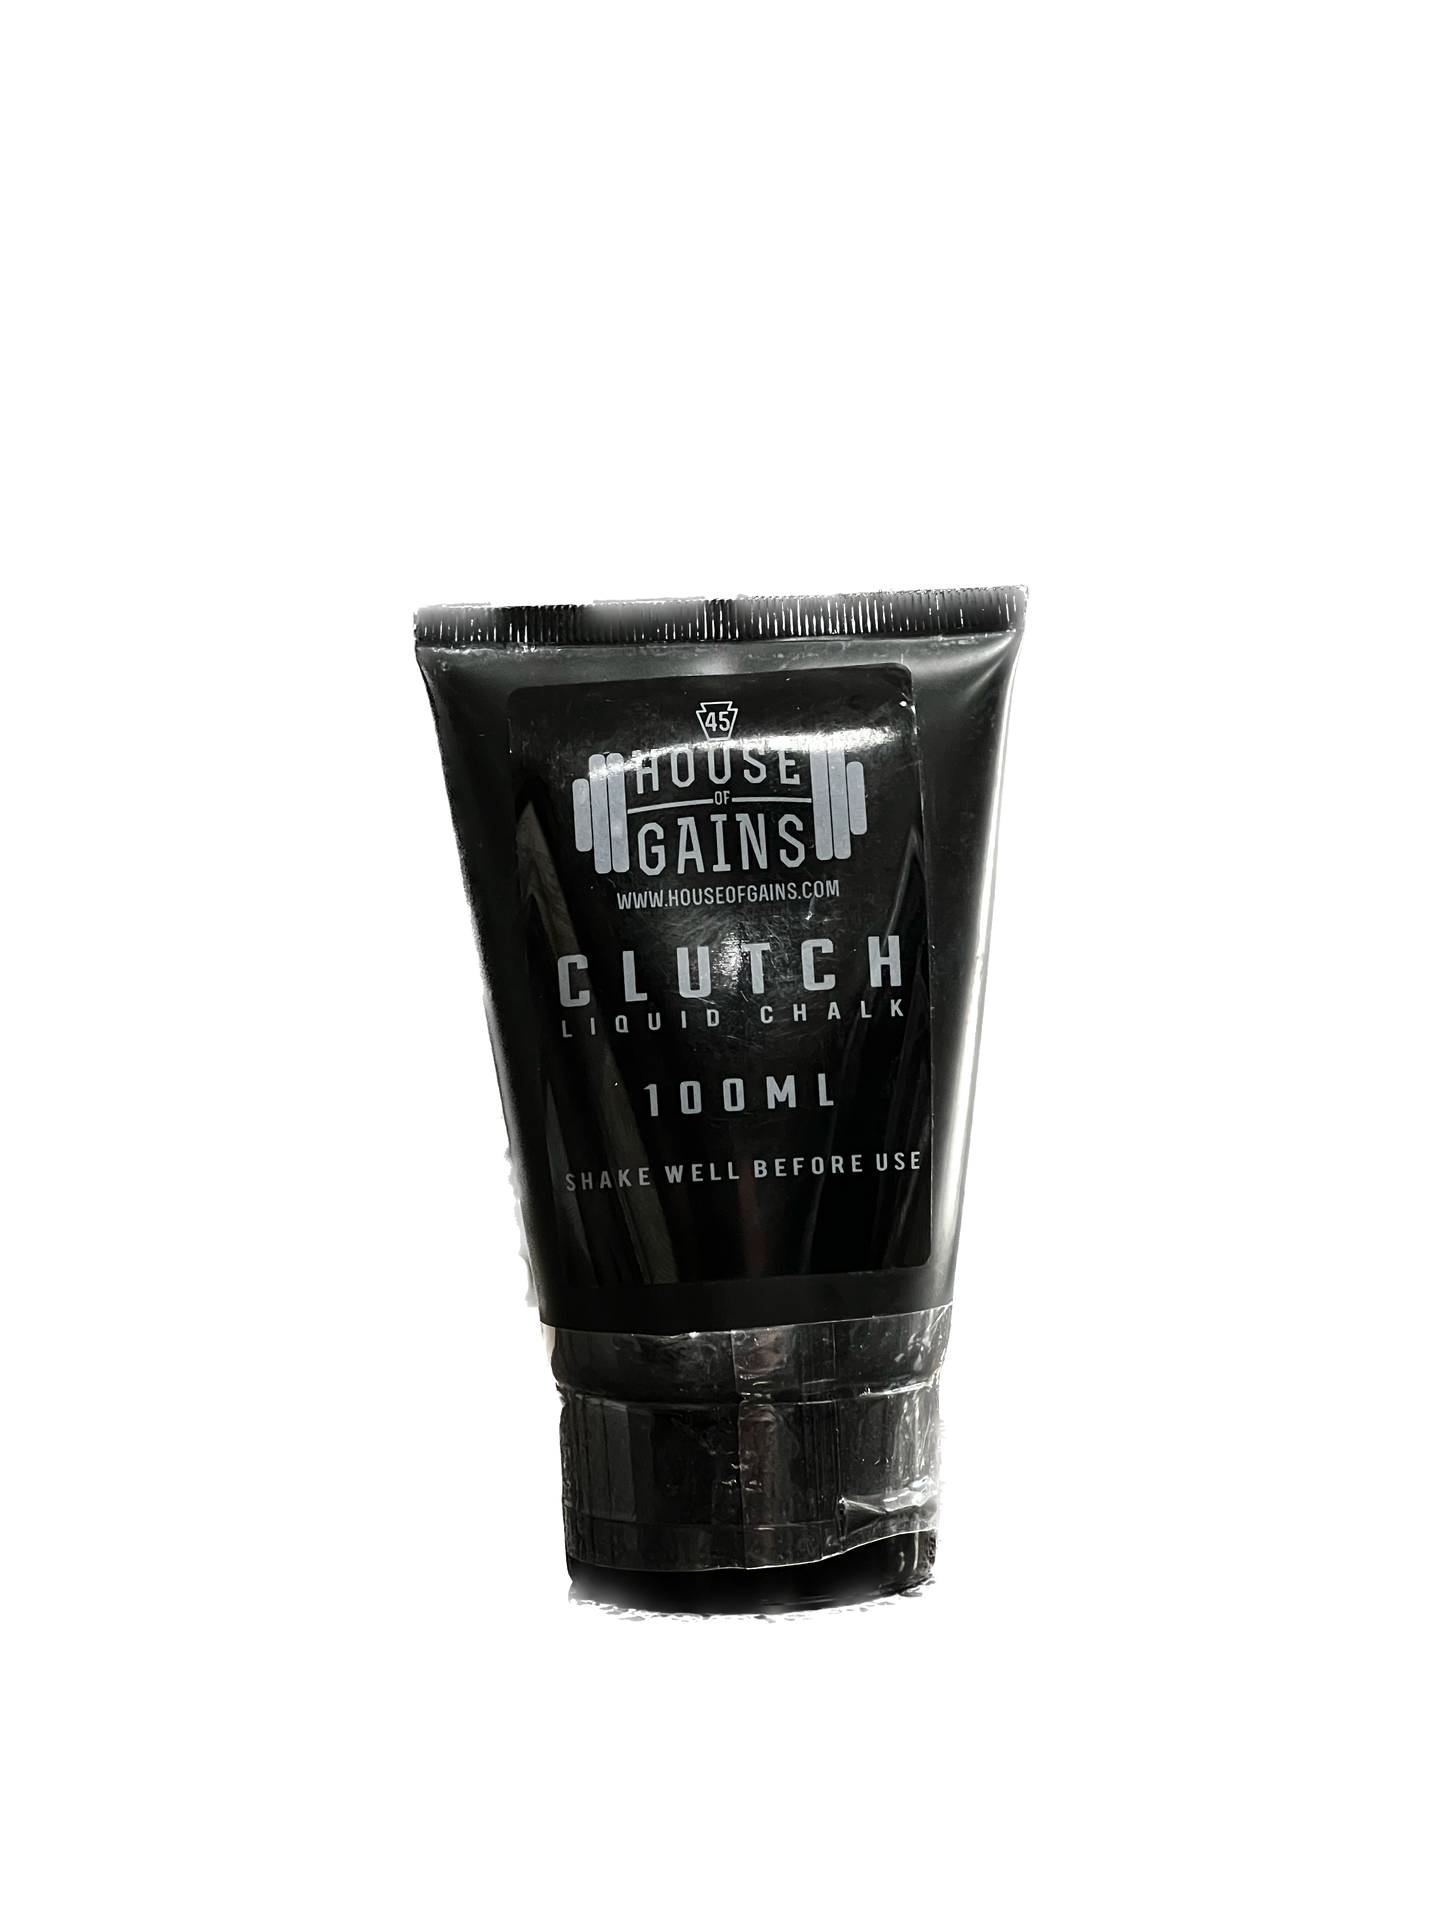 CLUTCH - Liquid Chalk